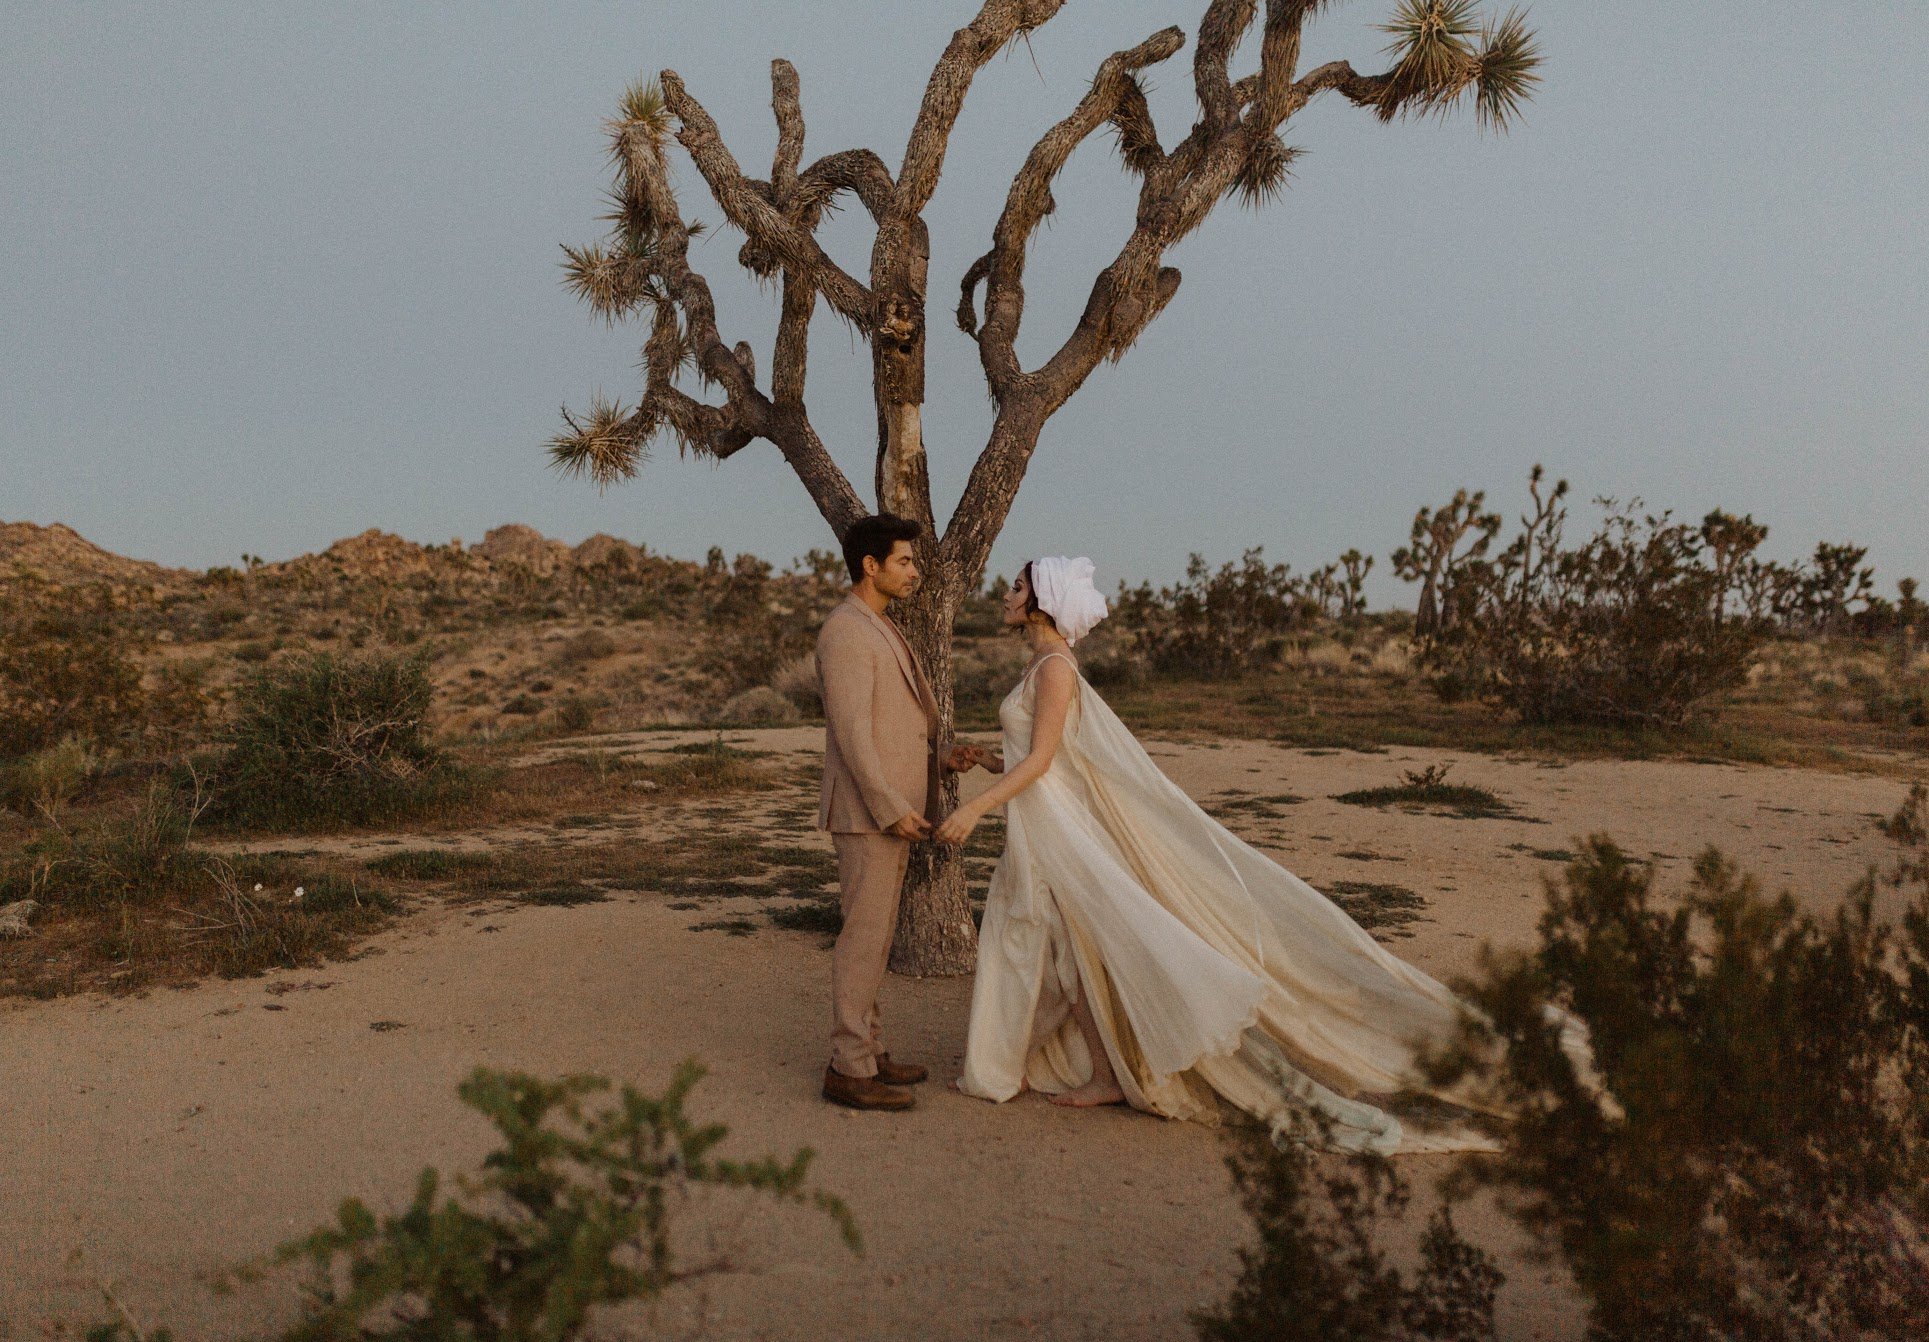   Leah wedding dress . Elopement in Joshua Tree, California. Photo by Alex Mari Photography.  